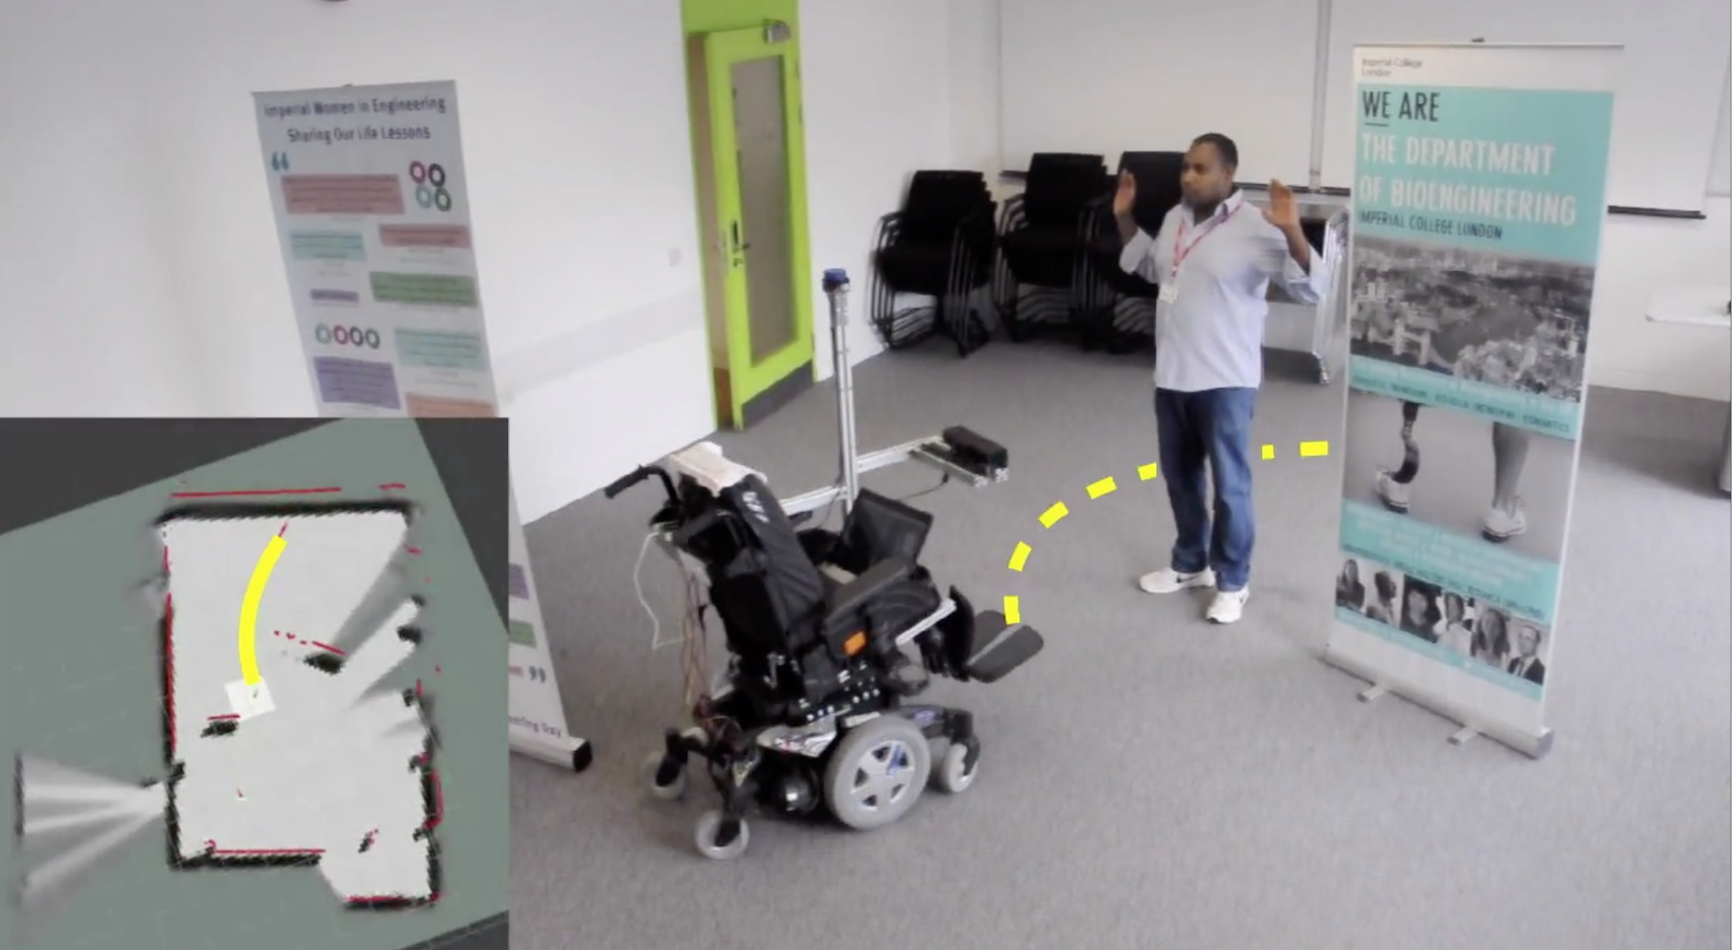 AI powered wheelchair crosses a room avoiding obstacles